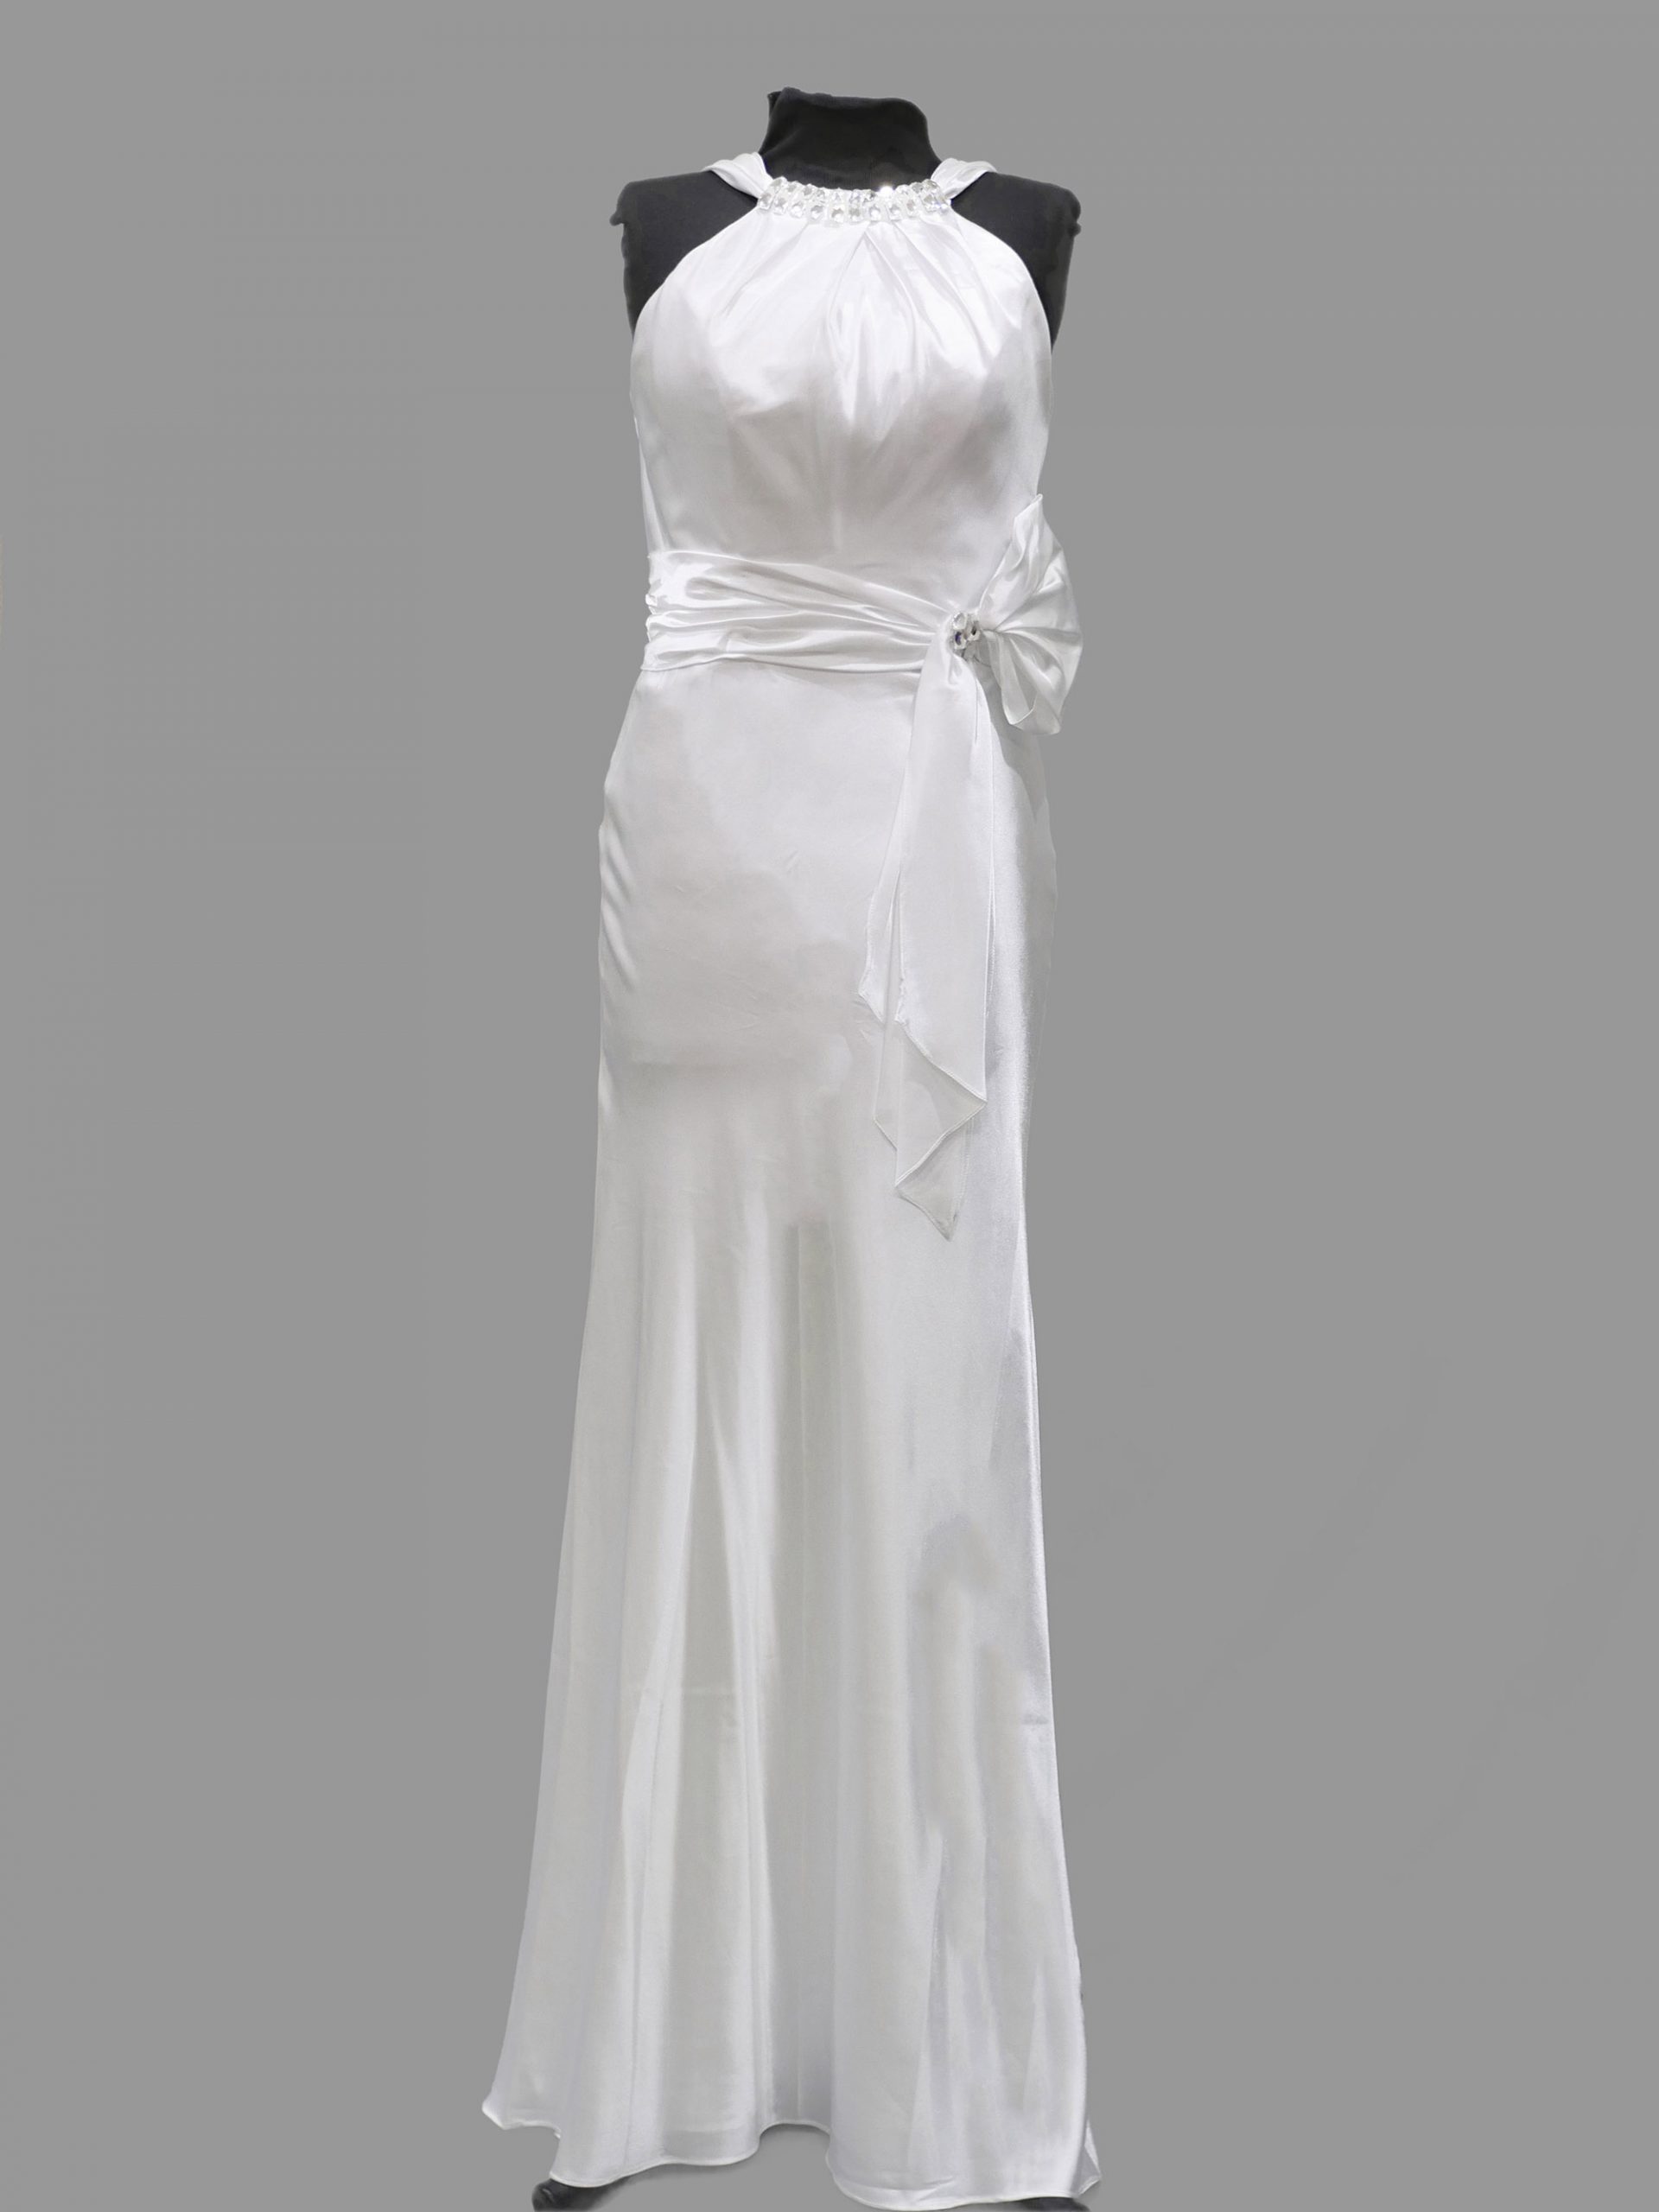 Simple Bridal/Debutante gown, Nicolina B11227D, white satin, generous size 6